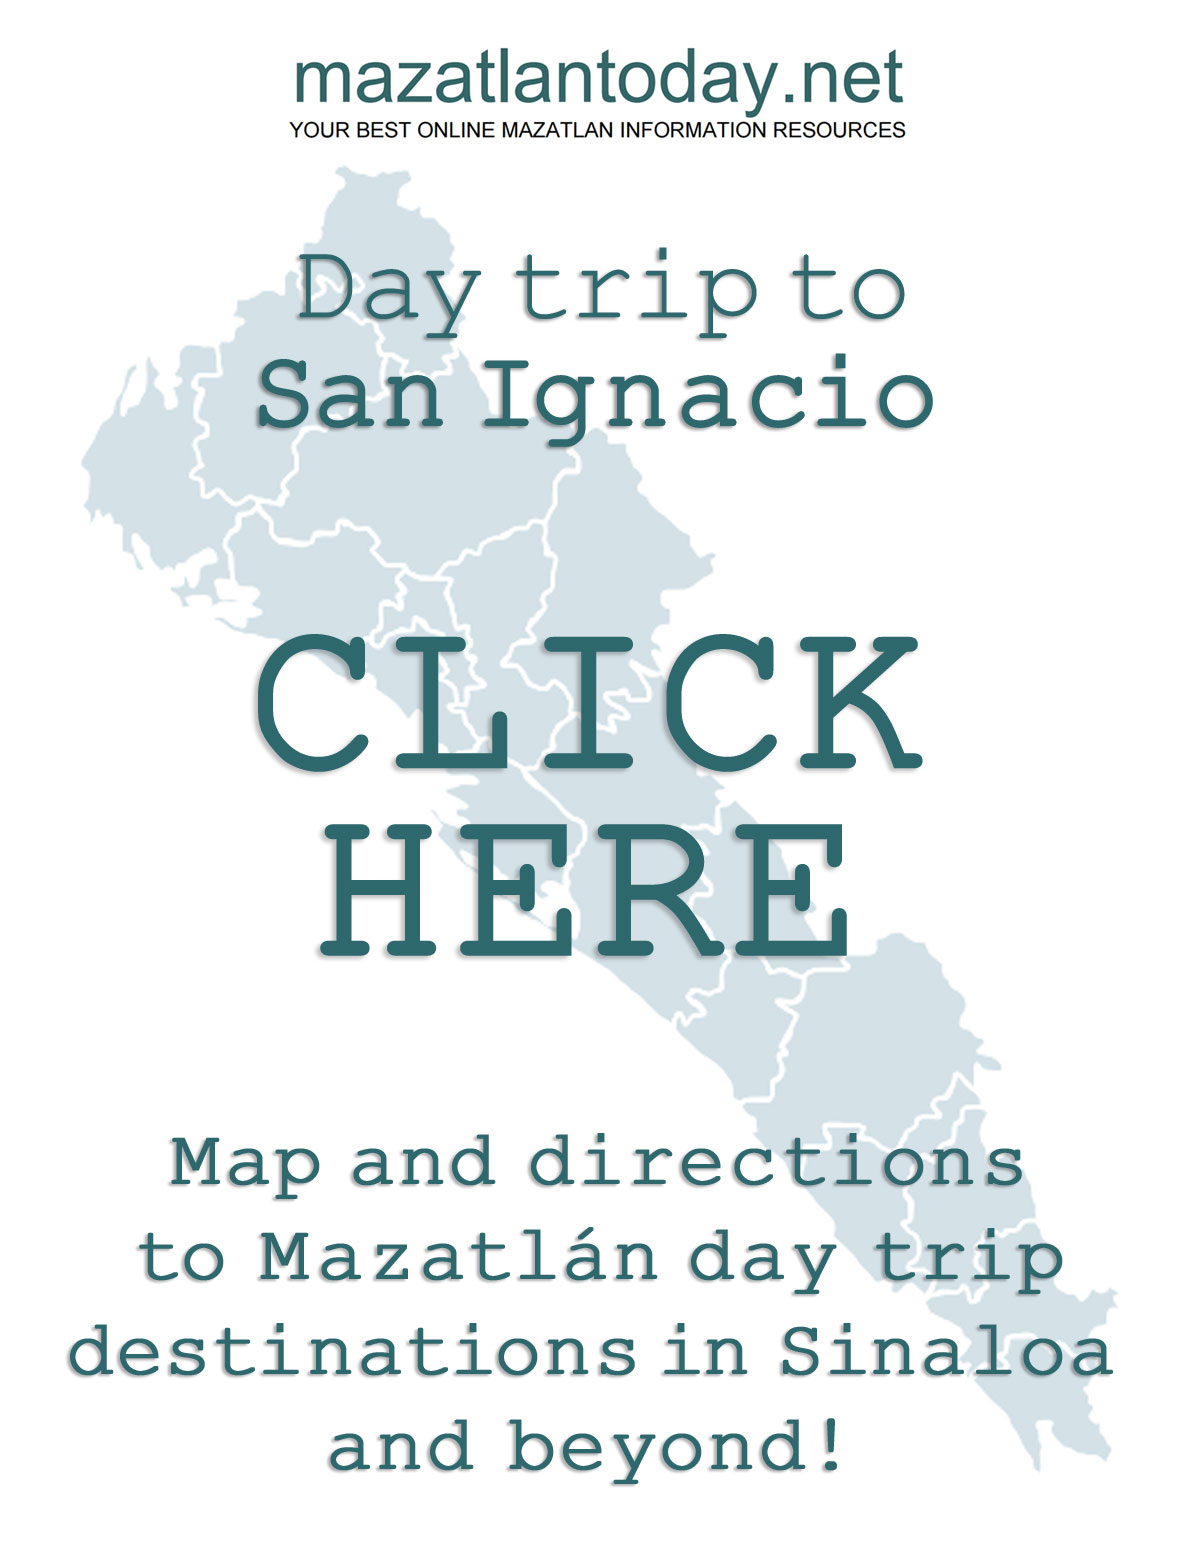 Download free Mazatlan - San Ignacio day trip map and directions